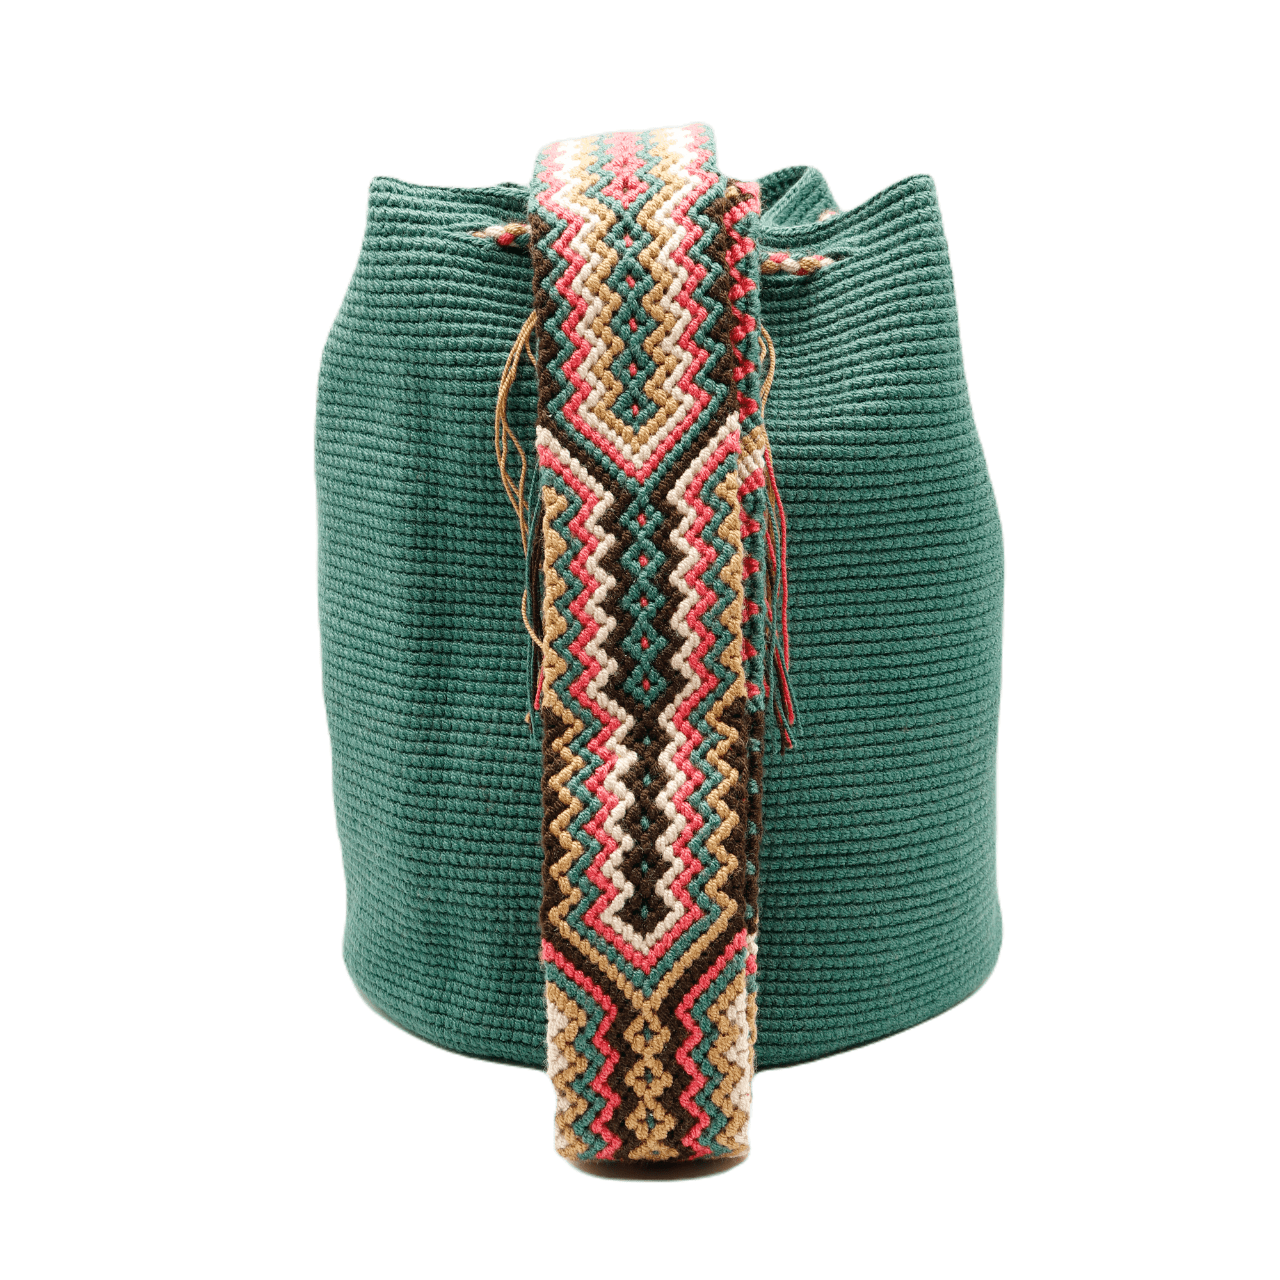 Liz Wayuu bag in sage green - Handmade crochet bag with intricate design, showcasing artisan craftsmanship from Colombia.